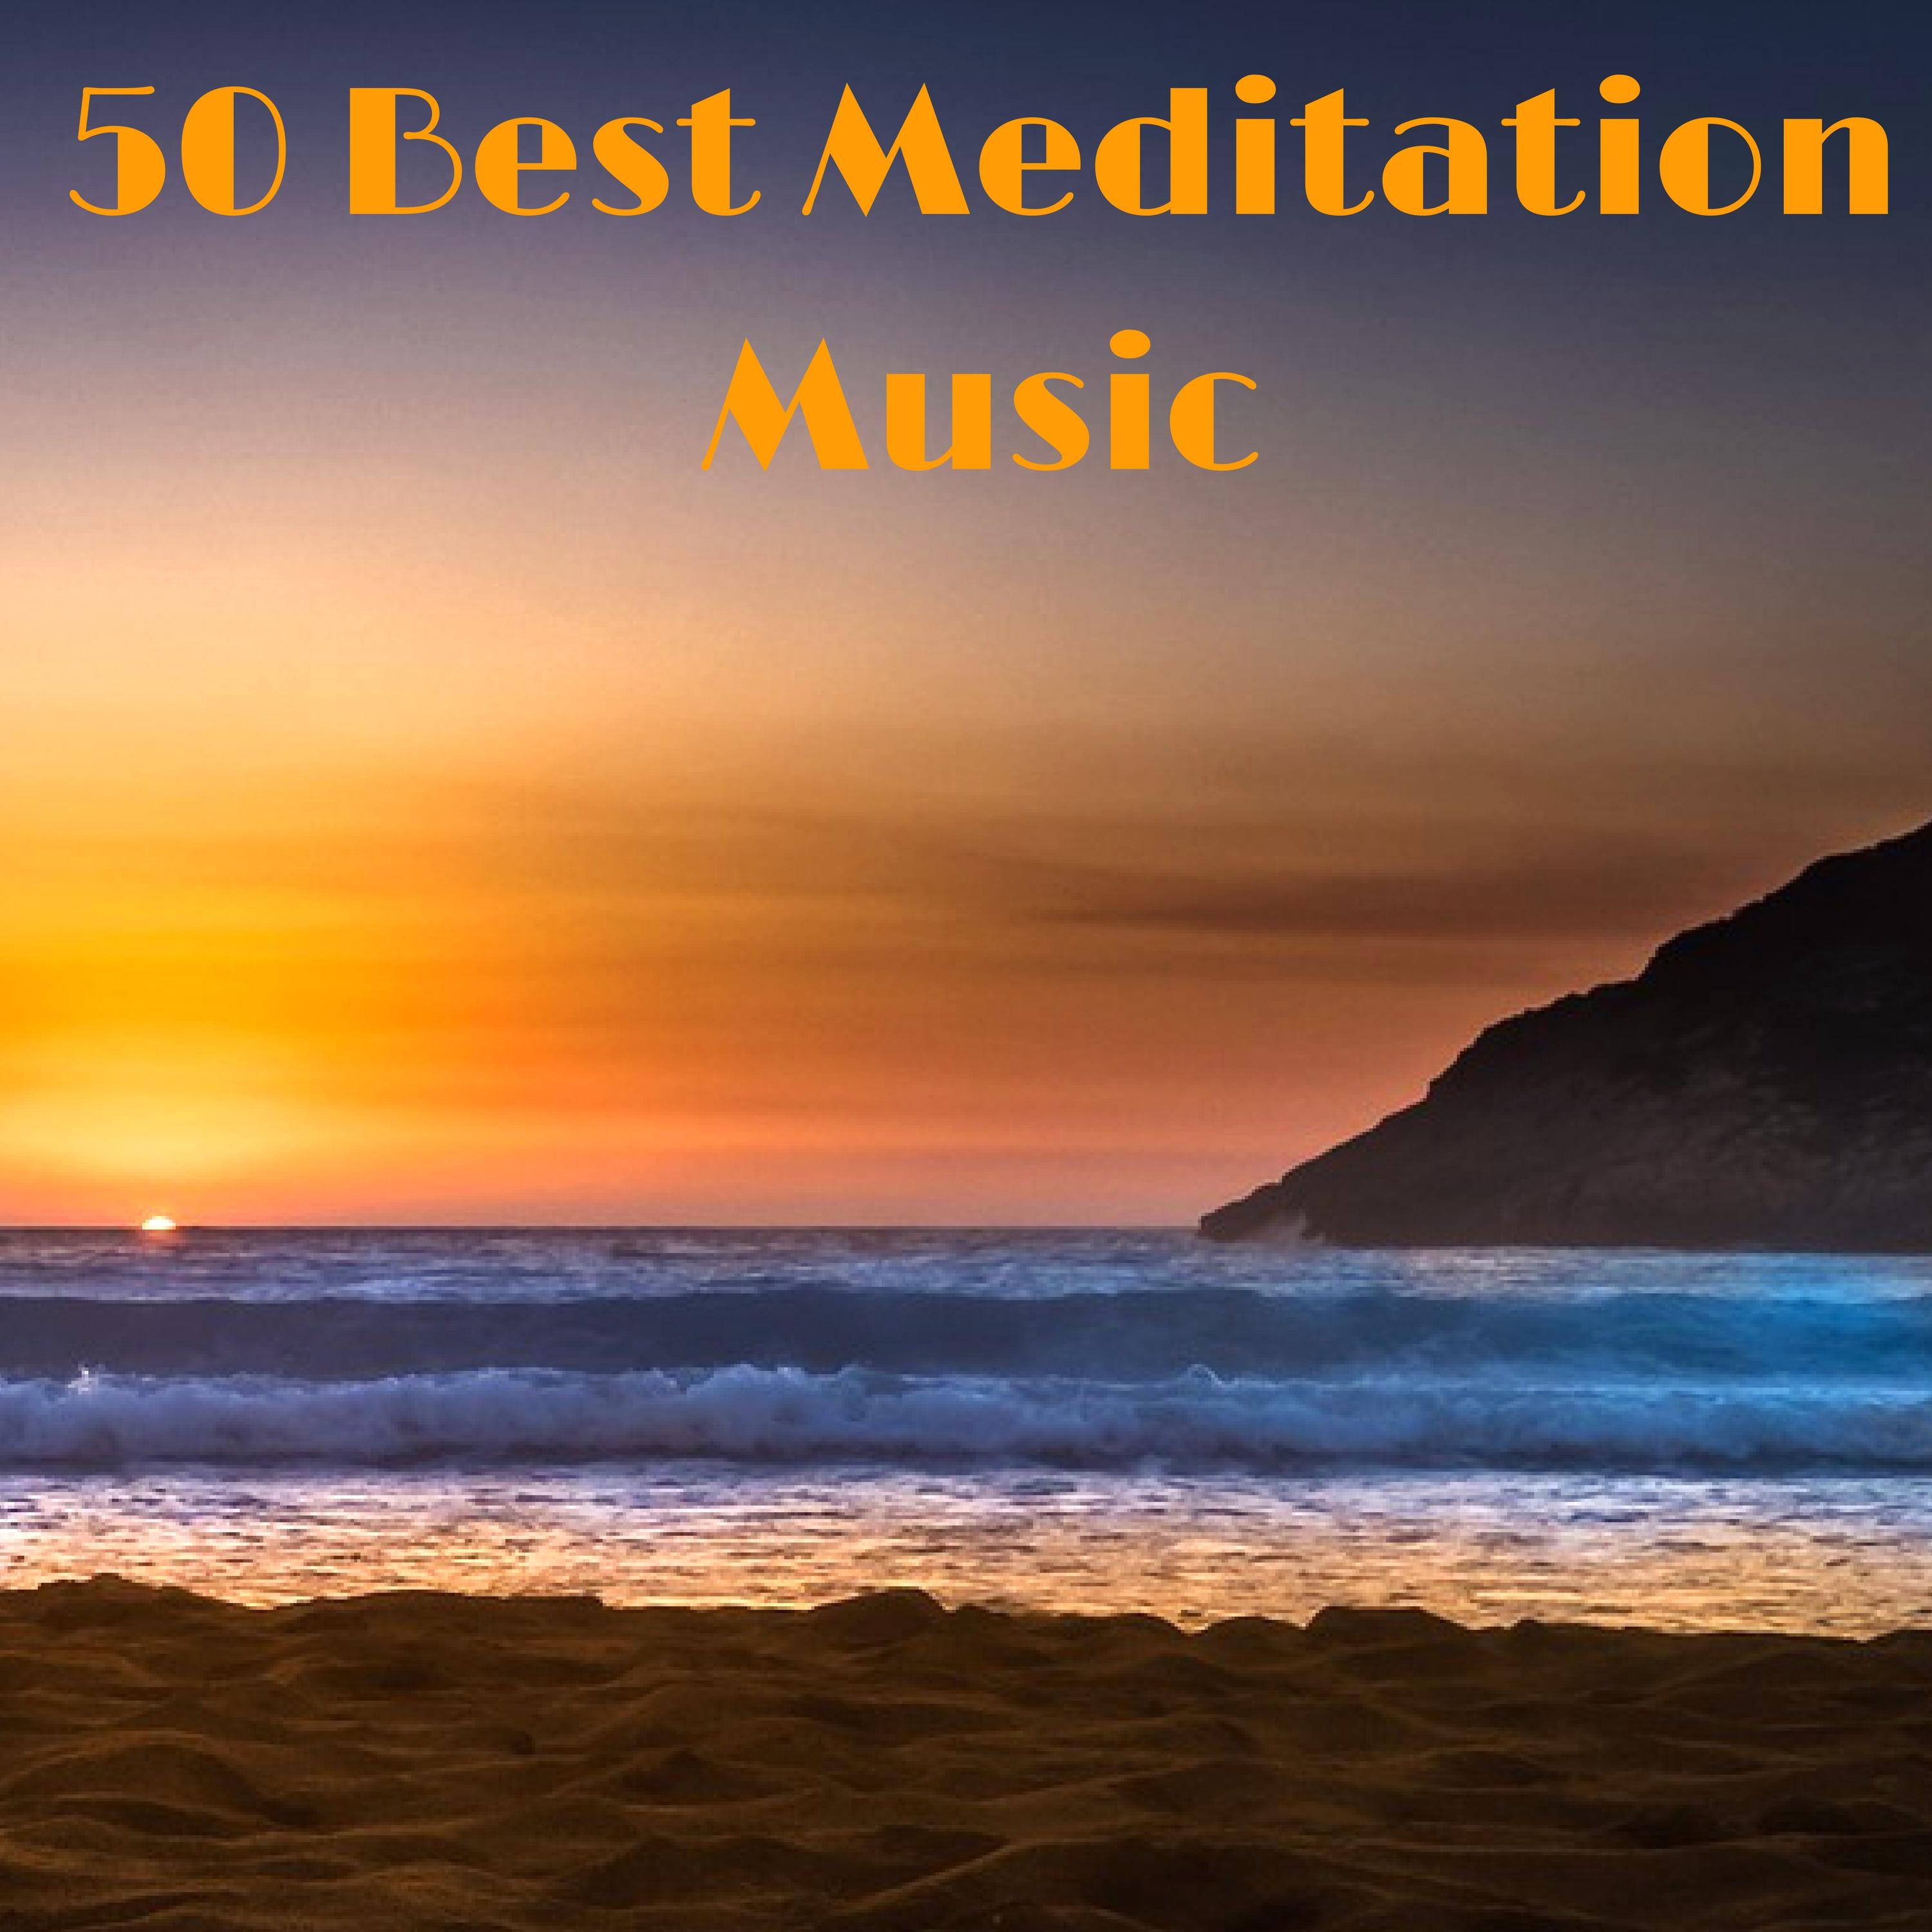 50 Best Meditation Music